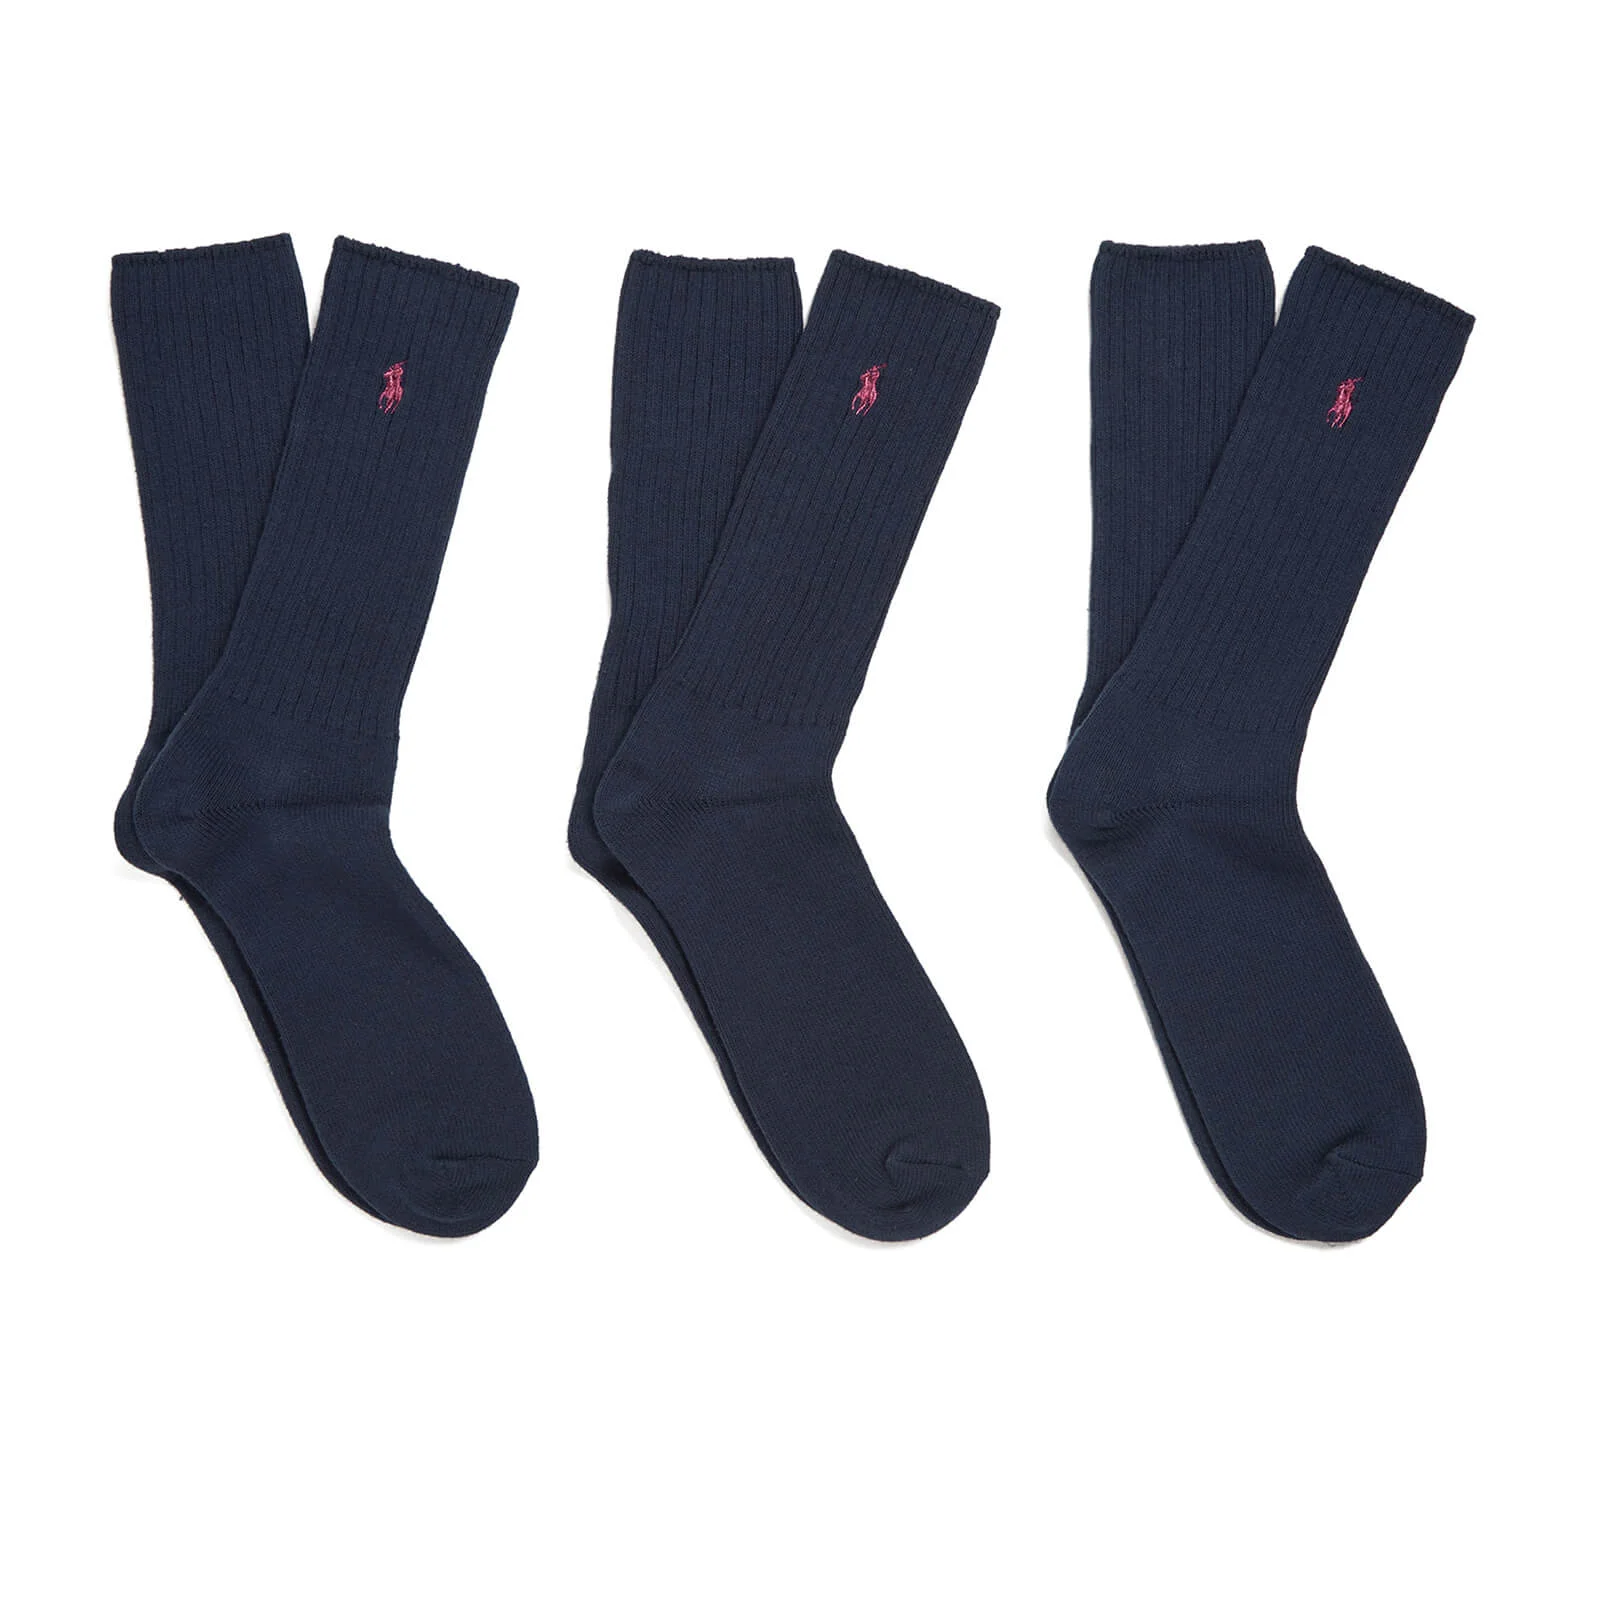 Polo Ralph Lauren Men's 3 Pack Crew Cotton Socks - Navy Image 1